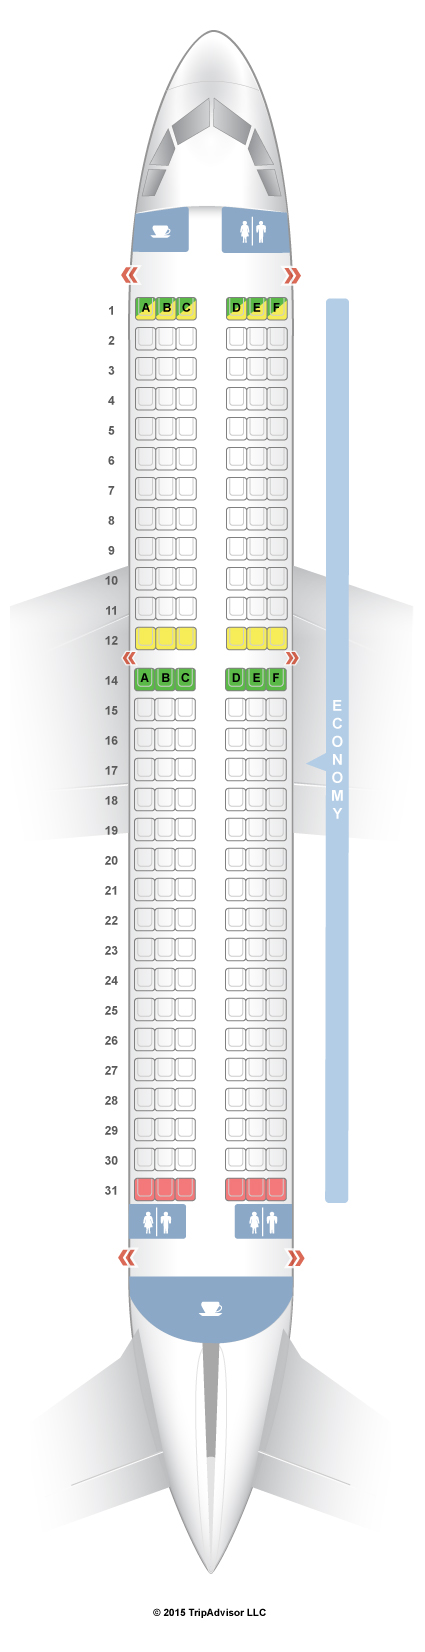 Cebu Pacific Seating Chart